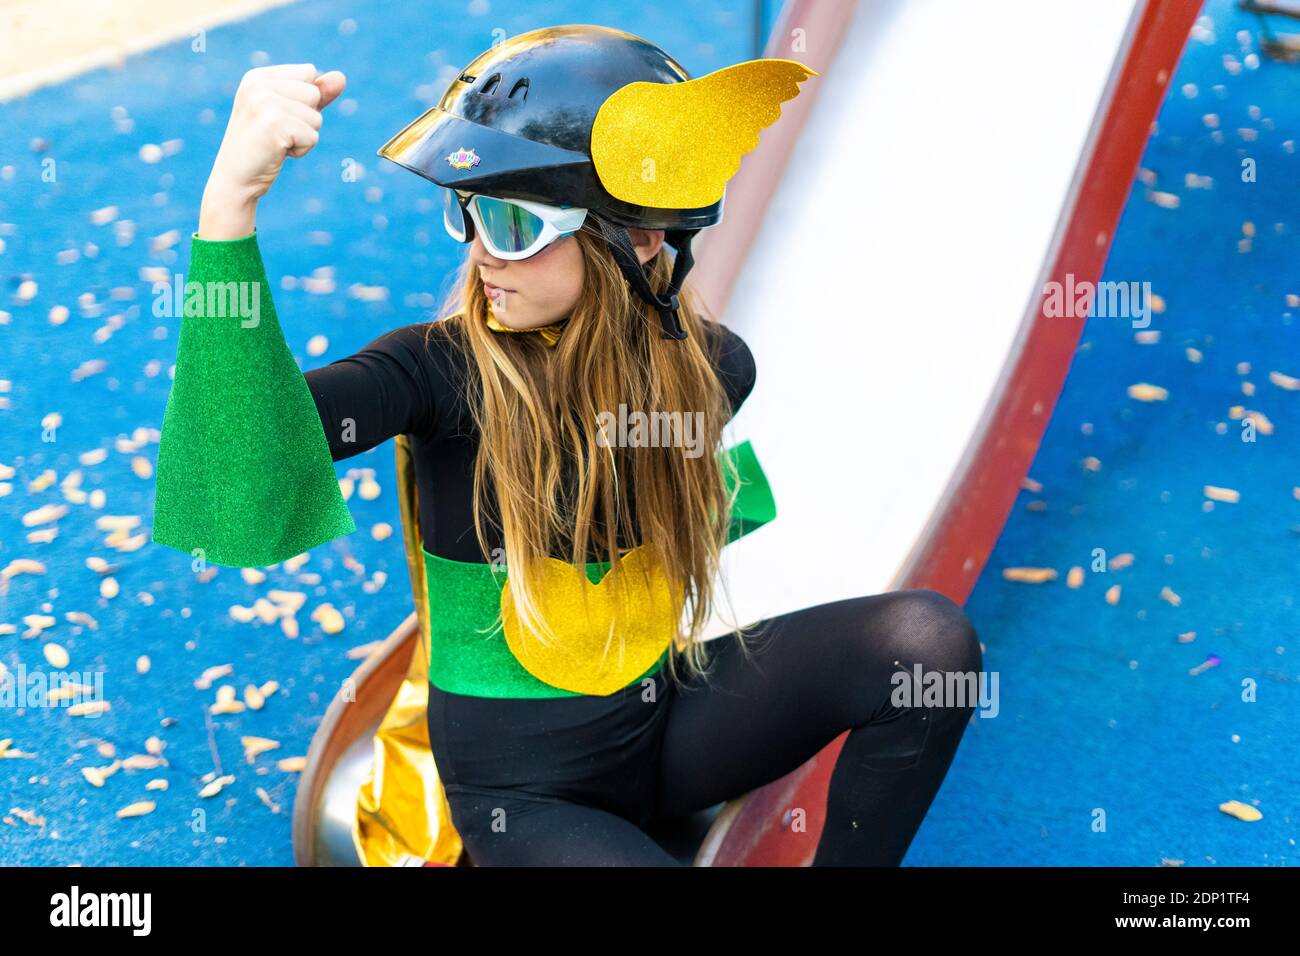 Girl in super heroine costume on playground slide flexing muscles Stock Photo